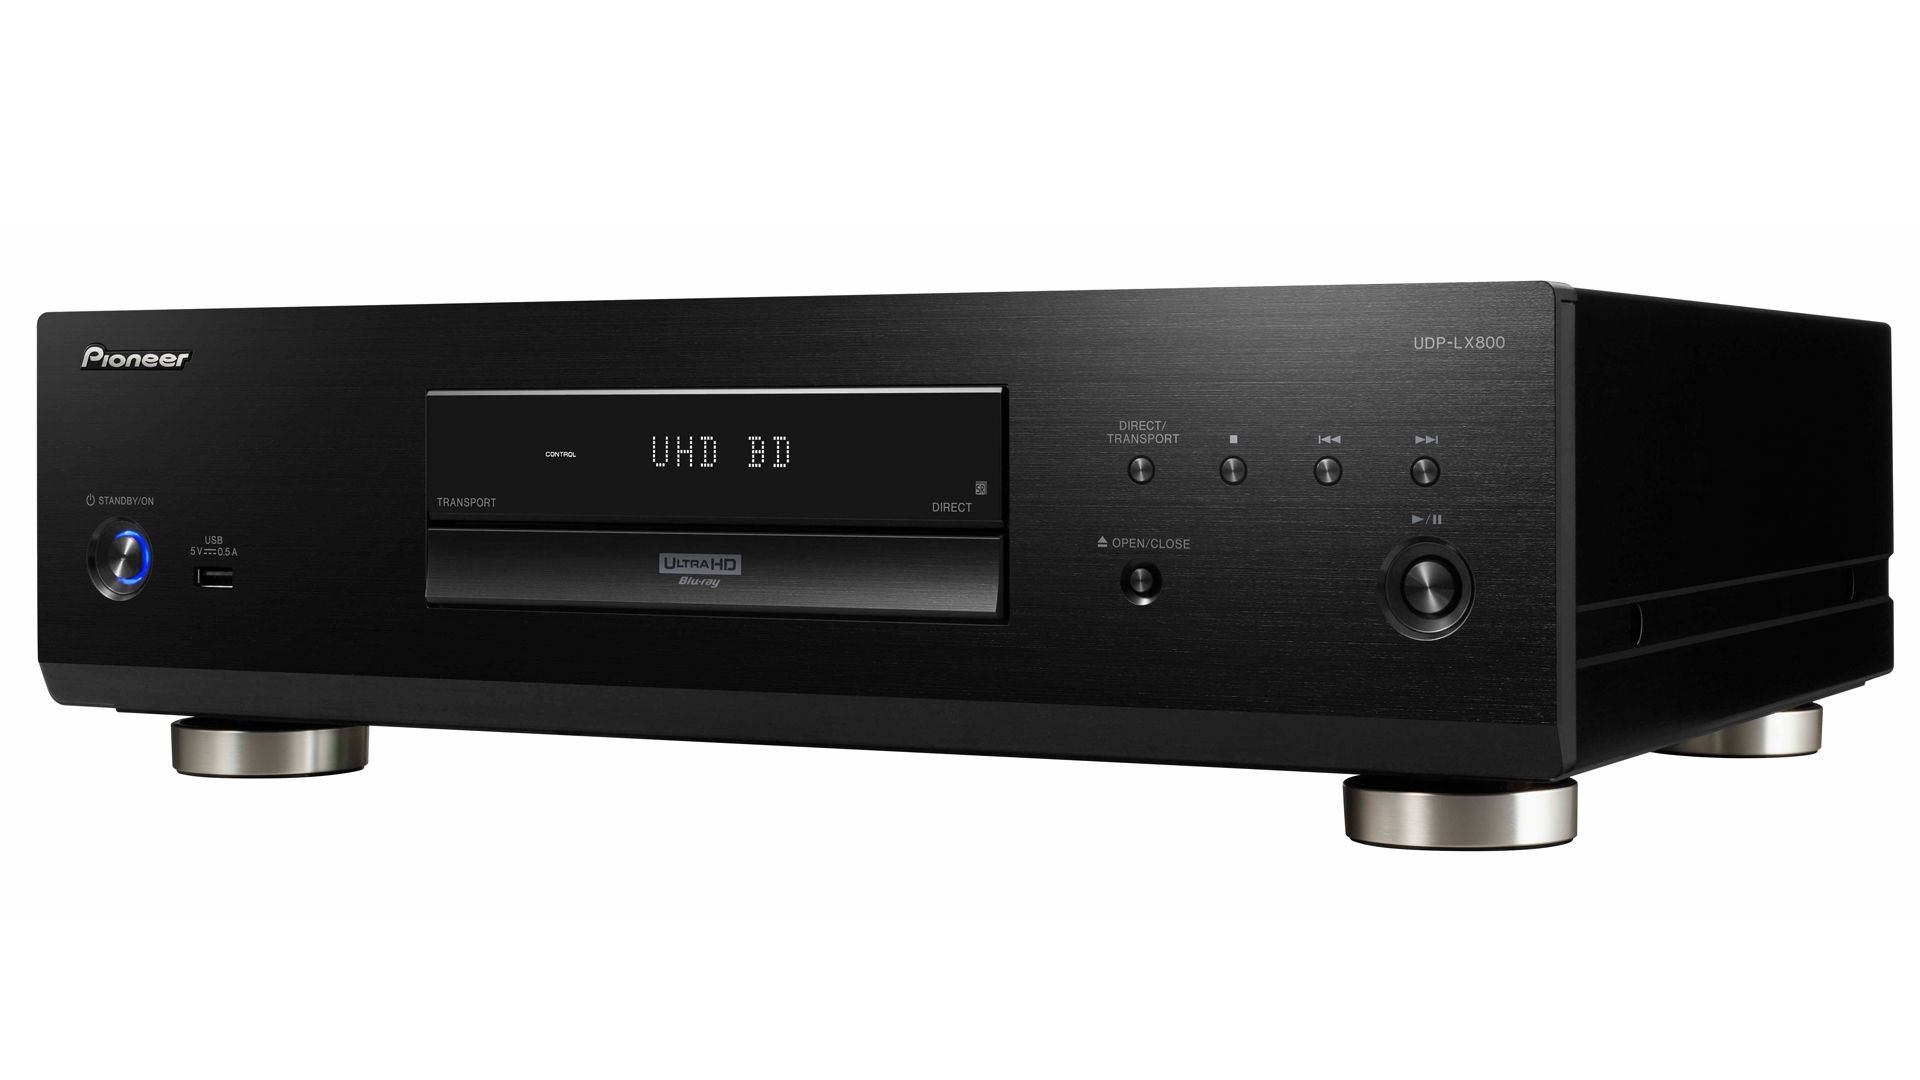 Pioneer UDP-LX800 4K UHD Blu-ray player review